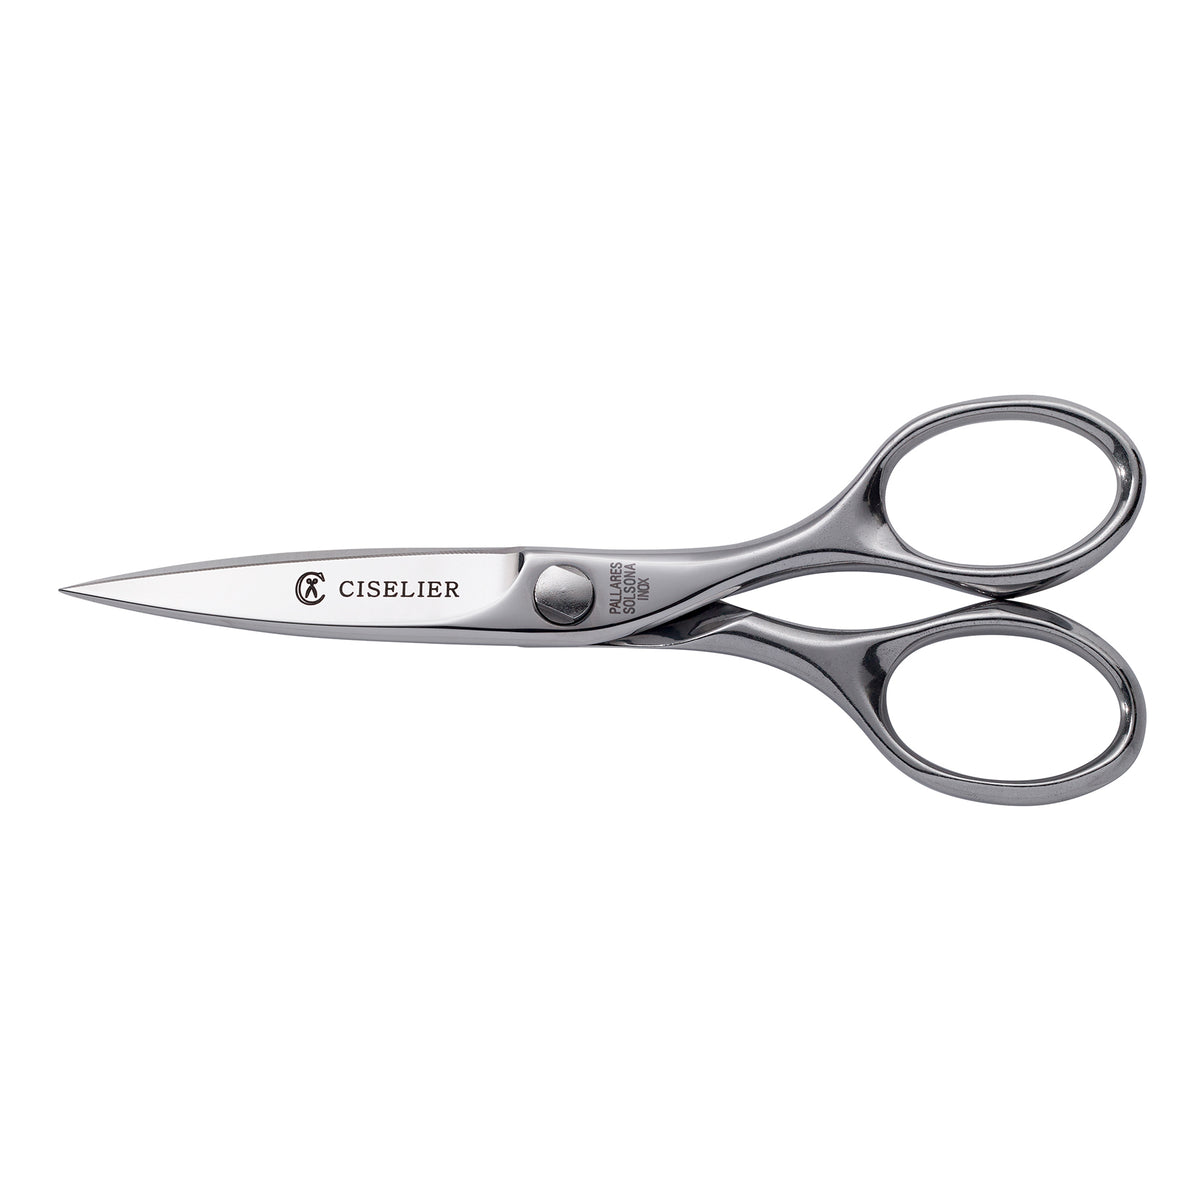 pallares Solsona kitchen scissors